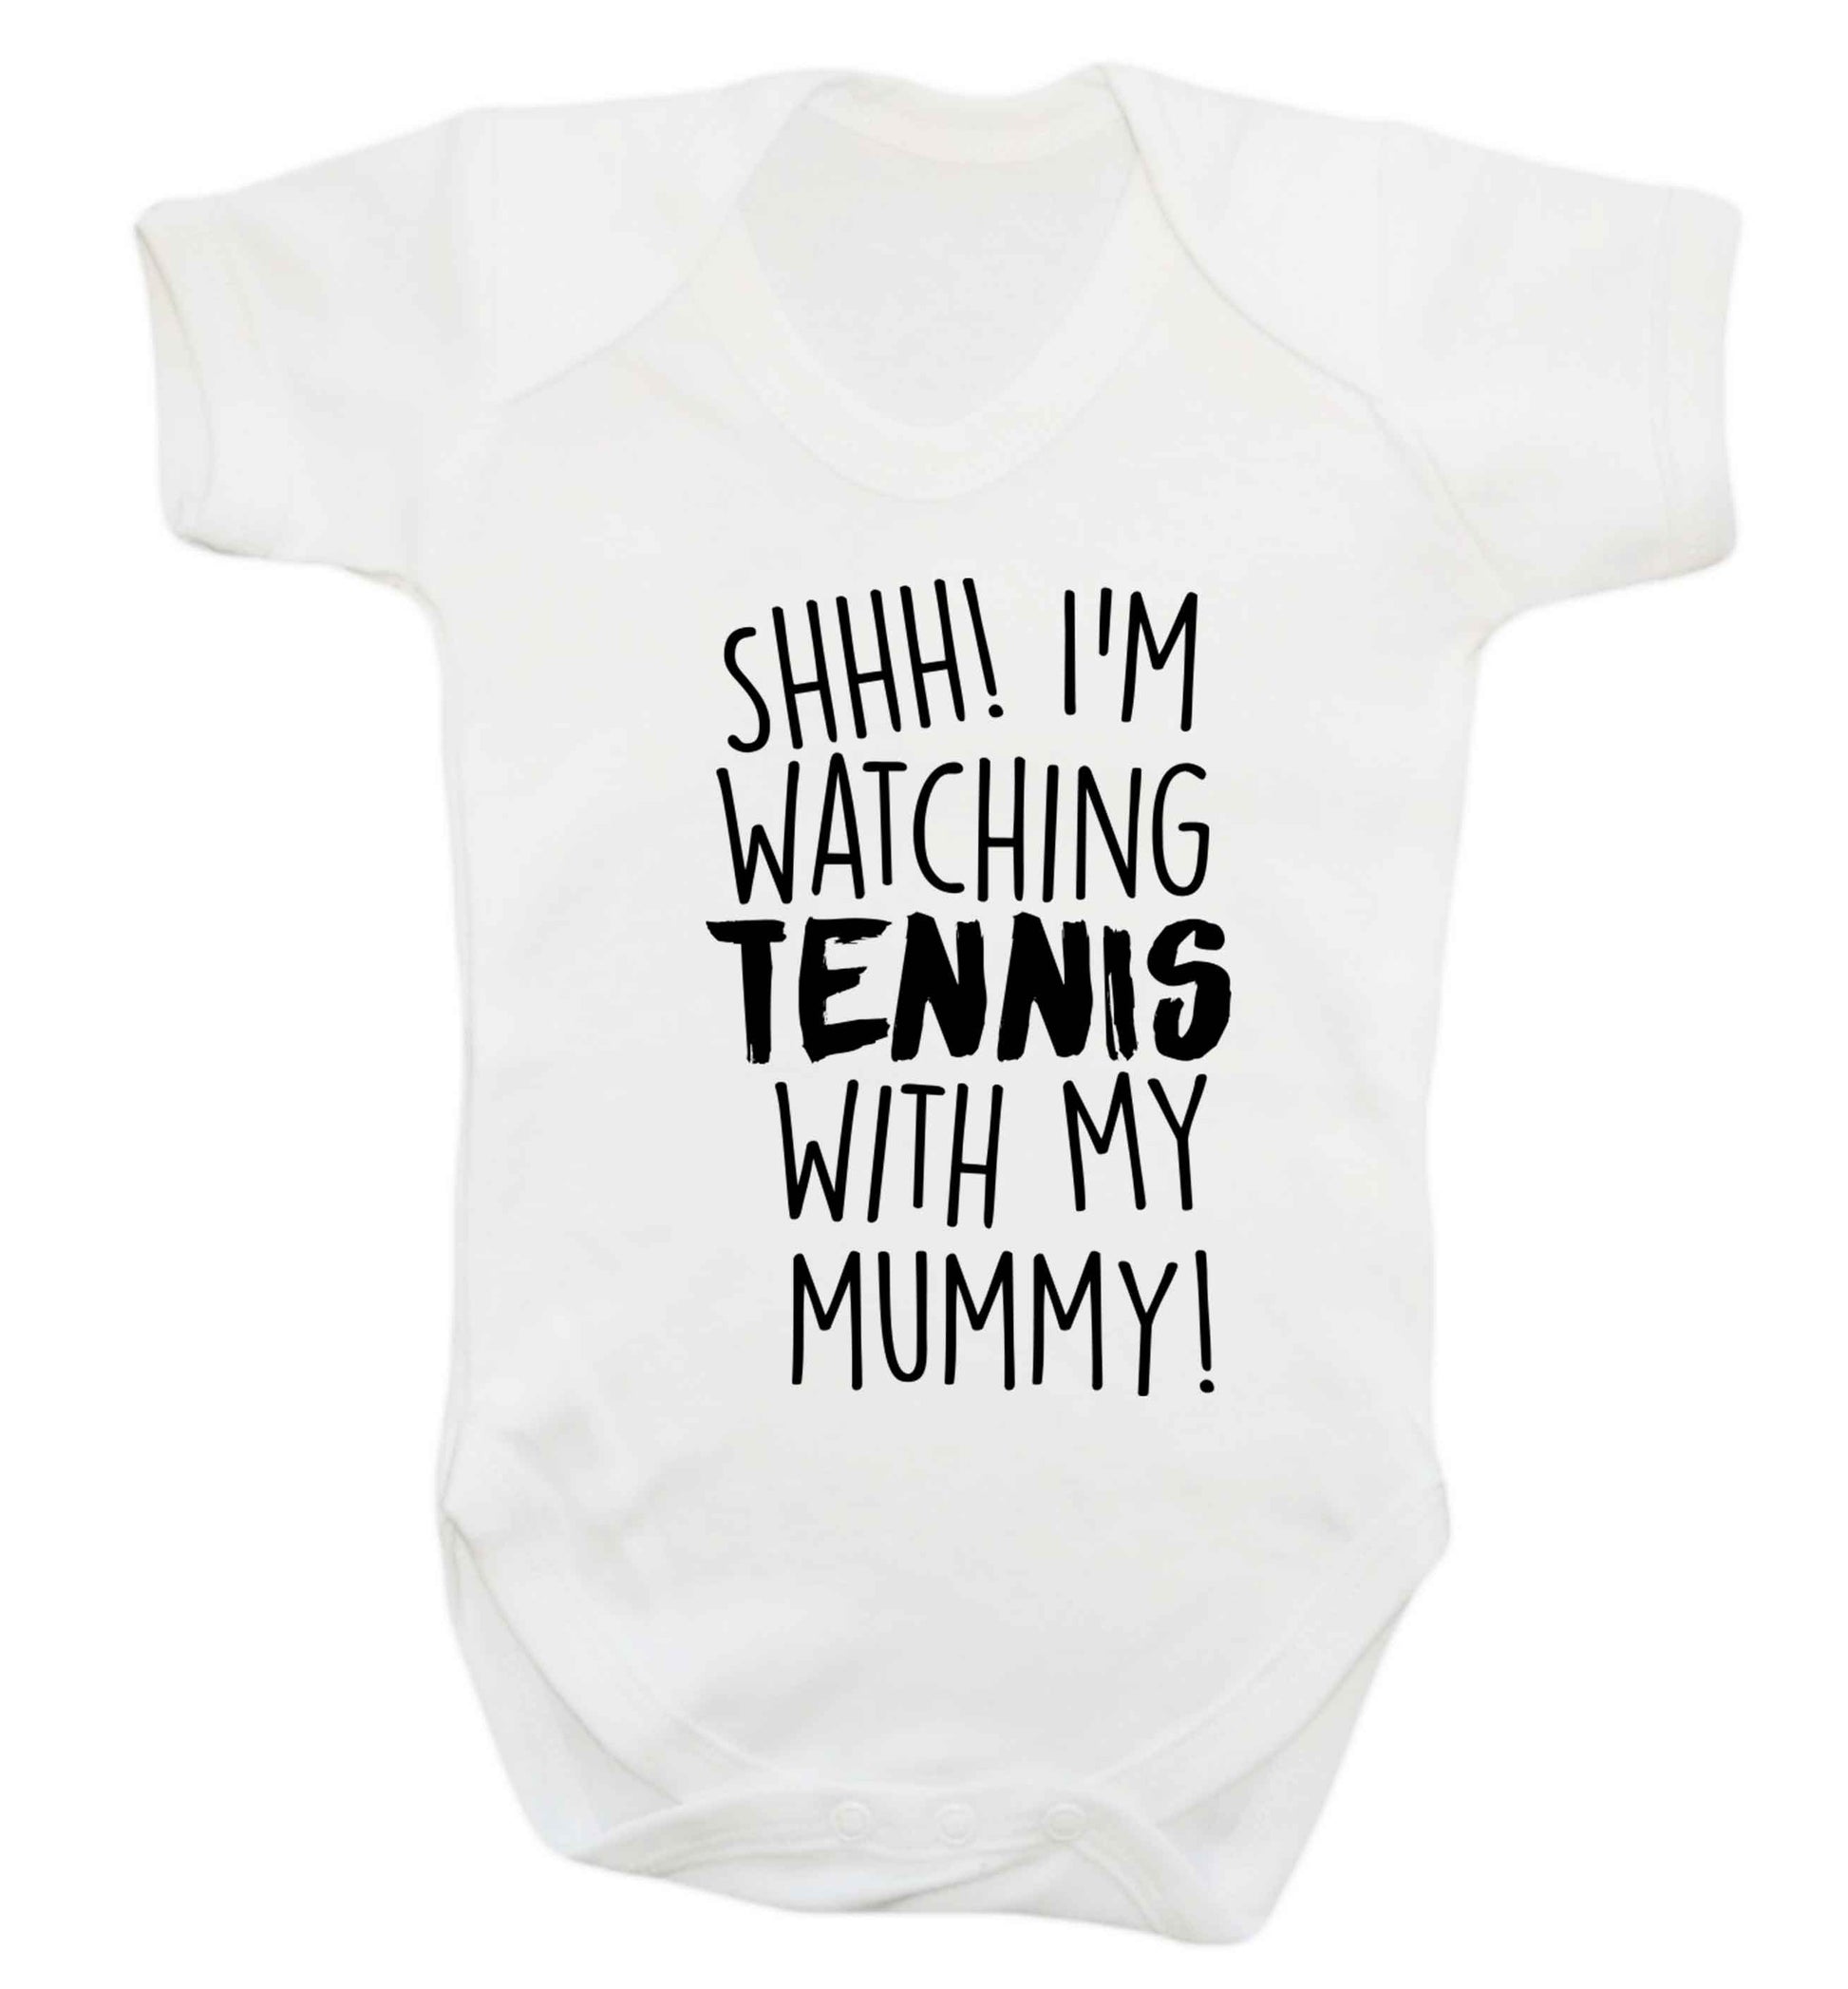 Shh! I'm watching tennis with my mummy! Baby Vest white 18-24 months